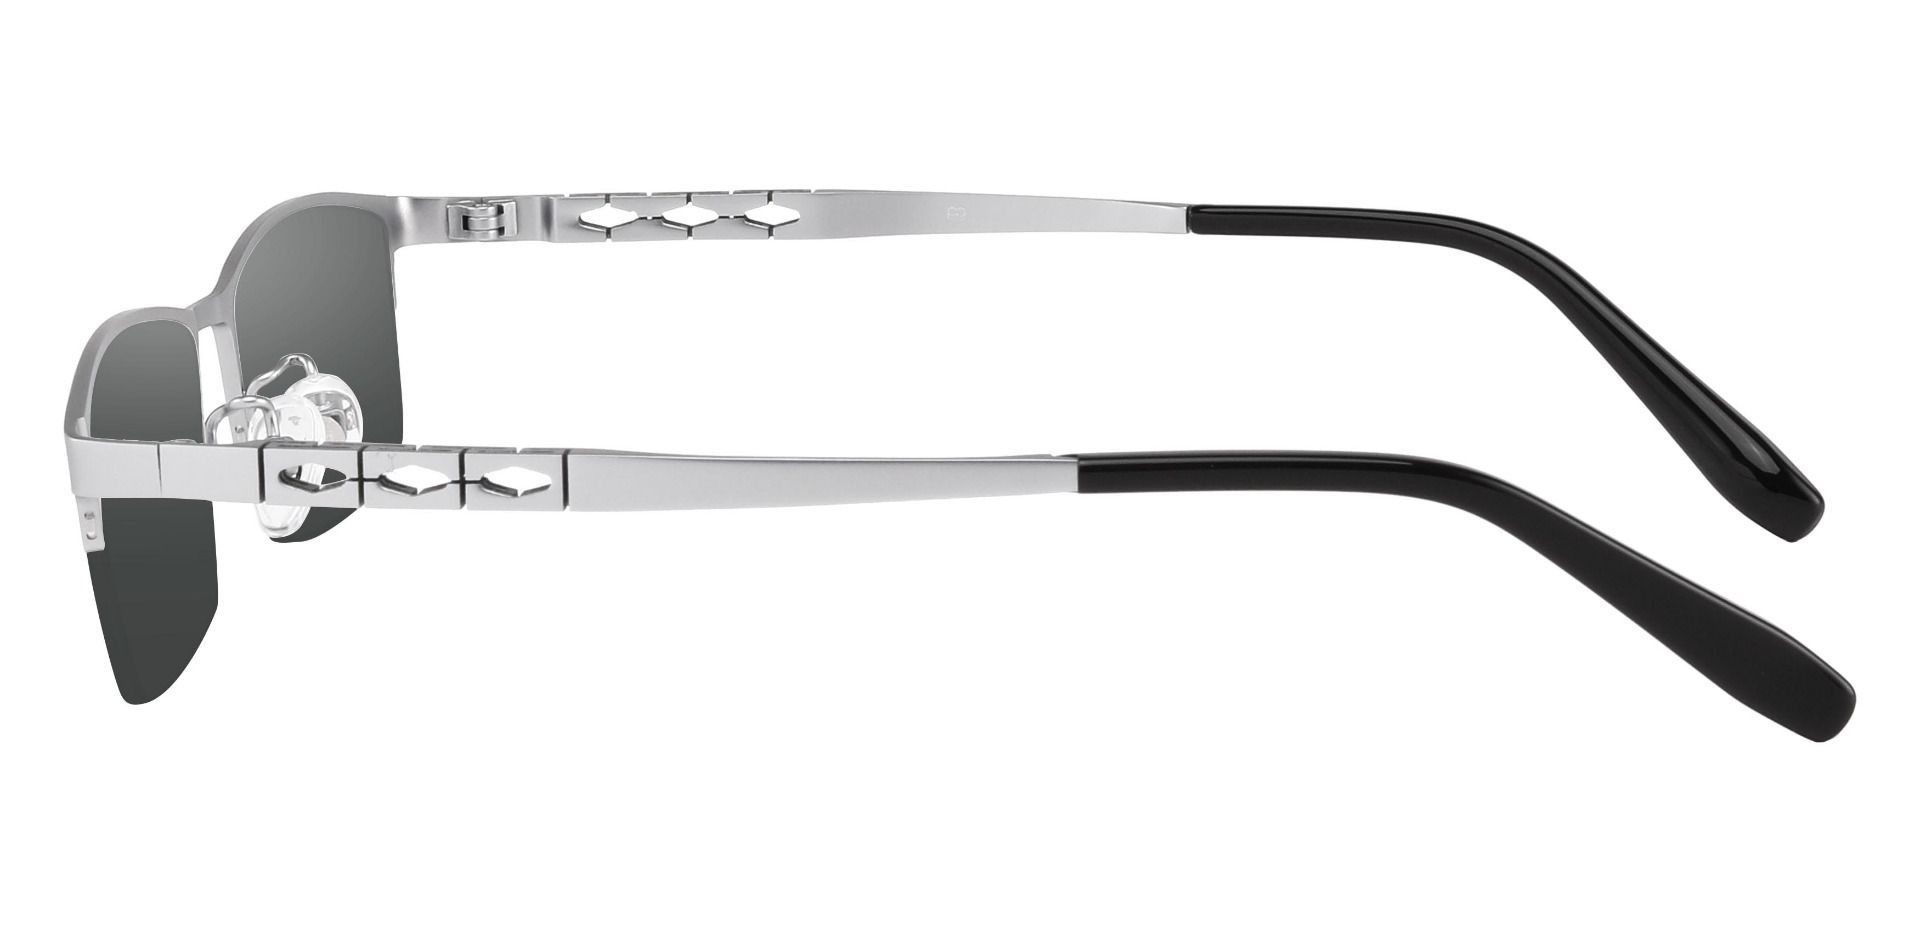 Burlington Rectangle Progressive Sunglasses - Silver Frame With Gray Lenses